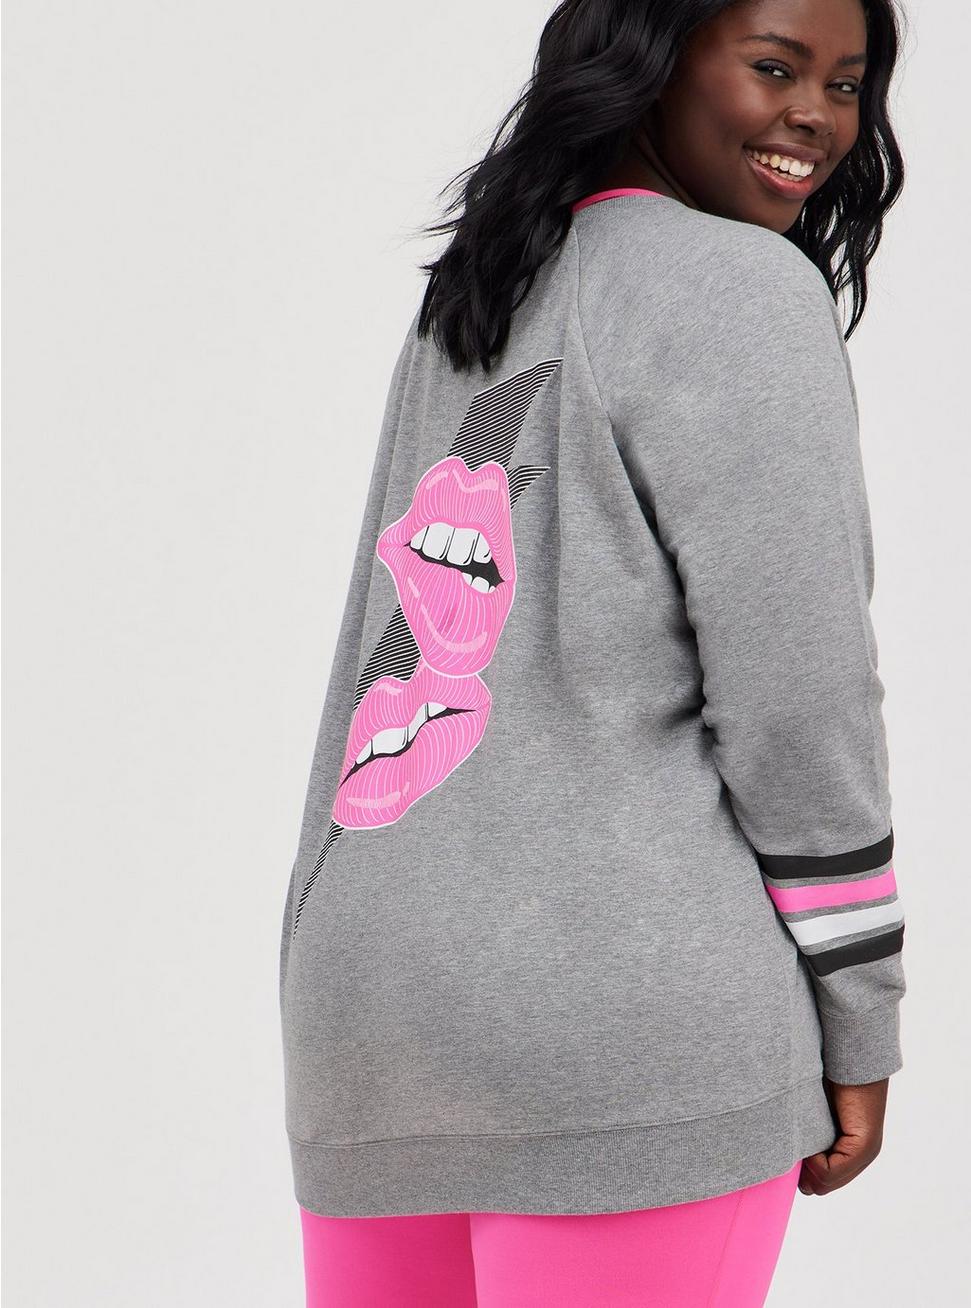 Relaxed Fit Raglan Sweatshirt - Ultra Soft Fleece Pink Lips Heather Grey, MEDIUM HEATHER GREY, alternate